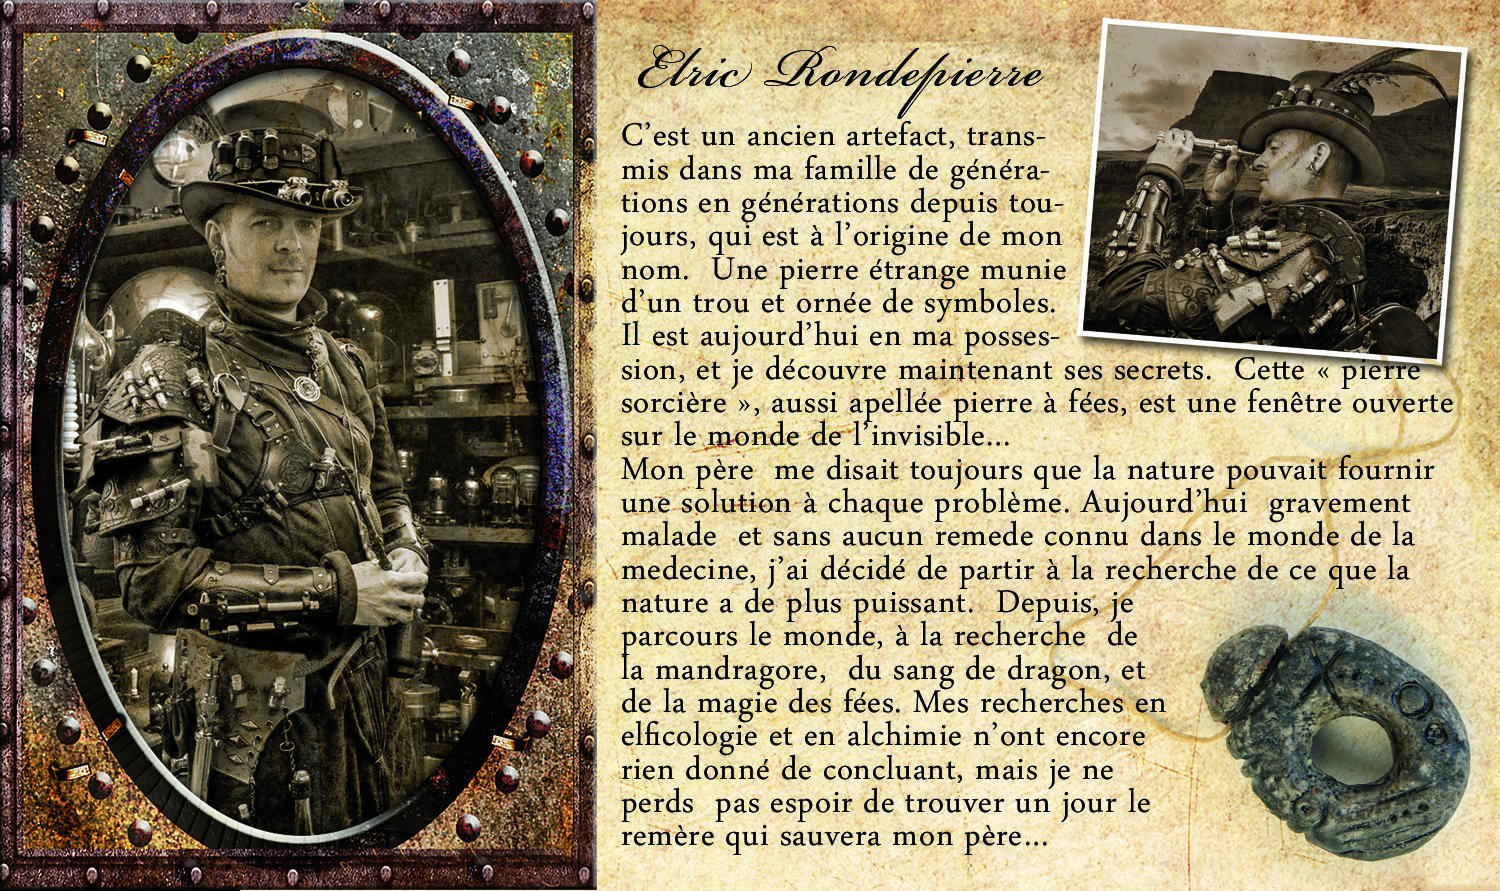 Elric Rondepierre